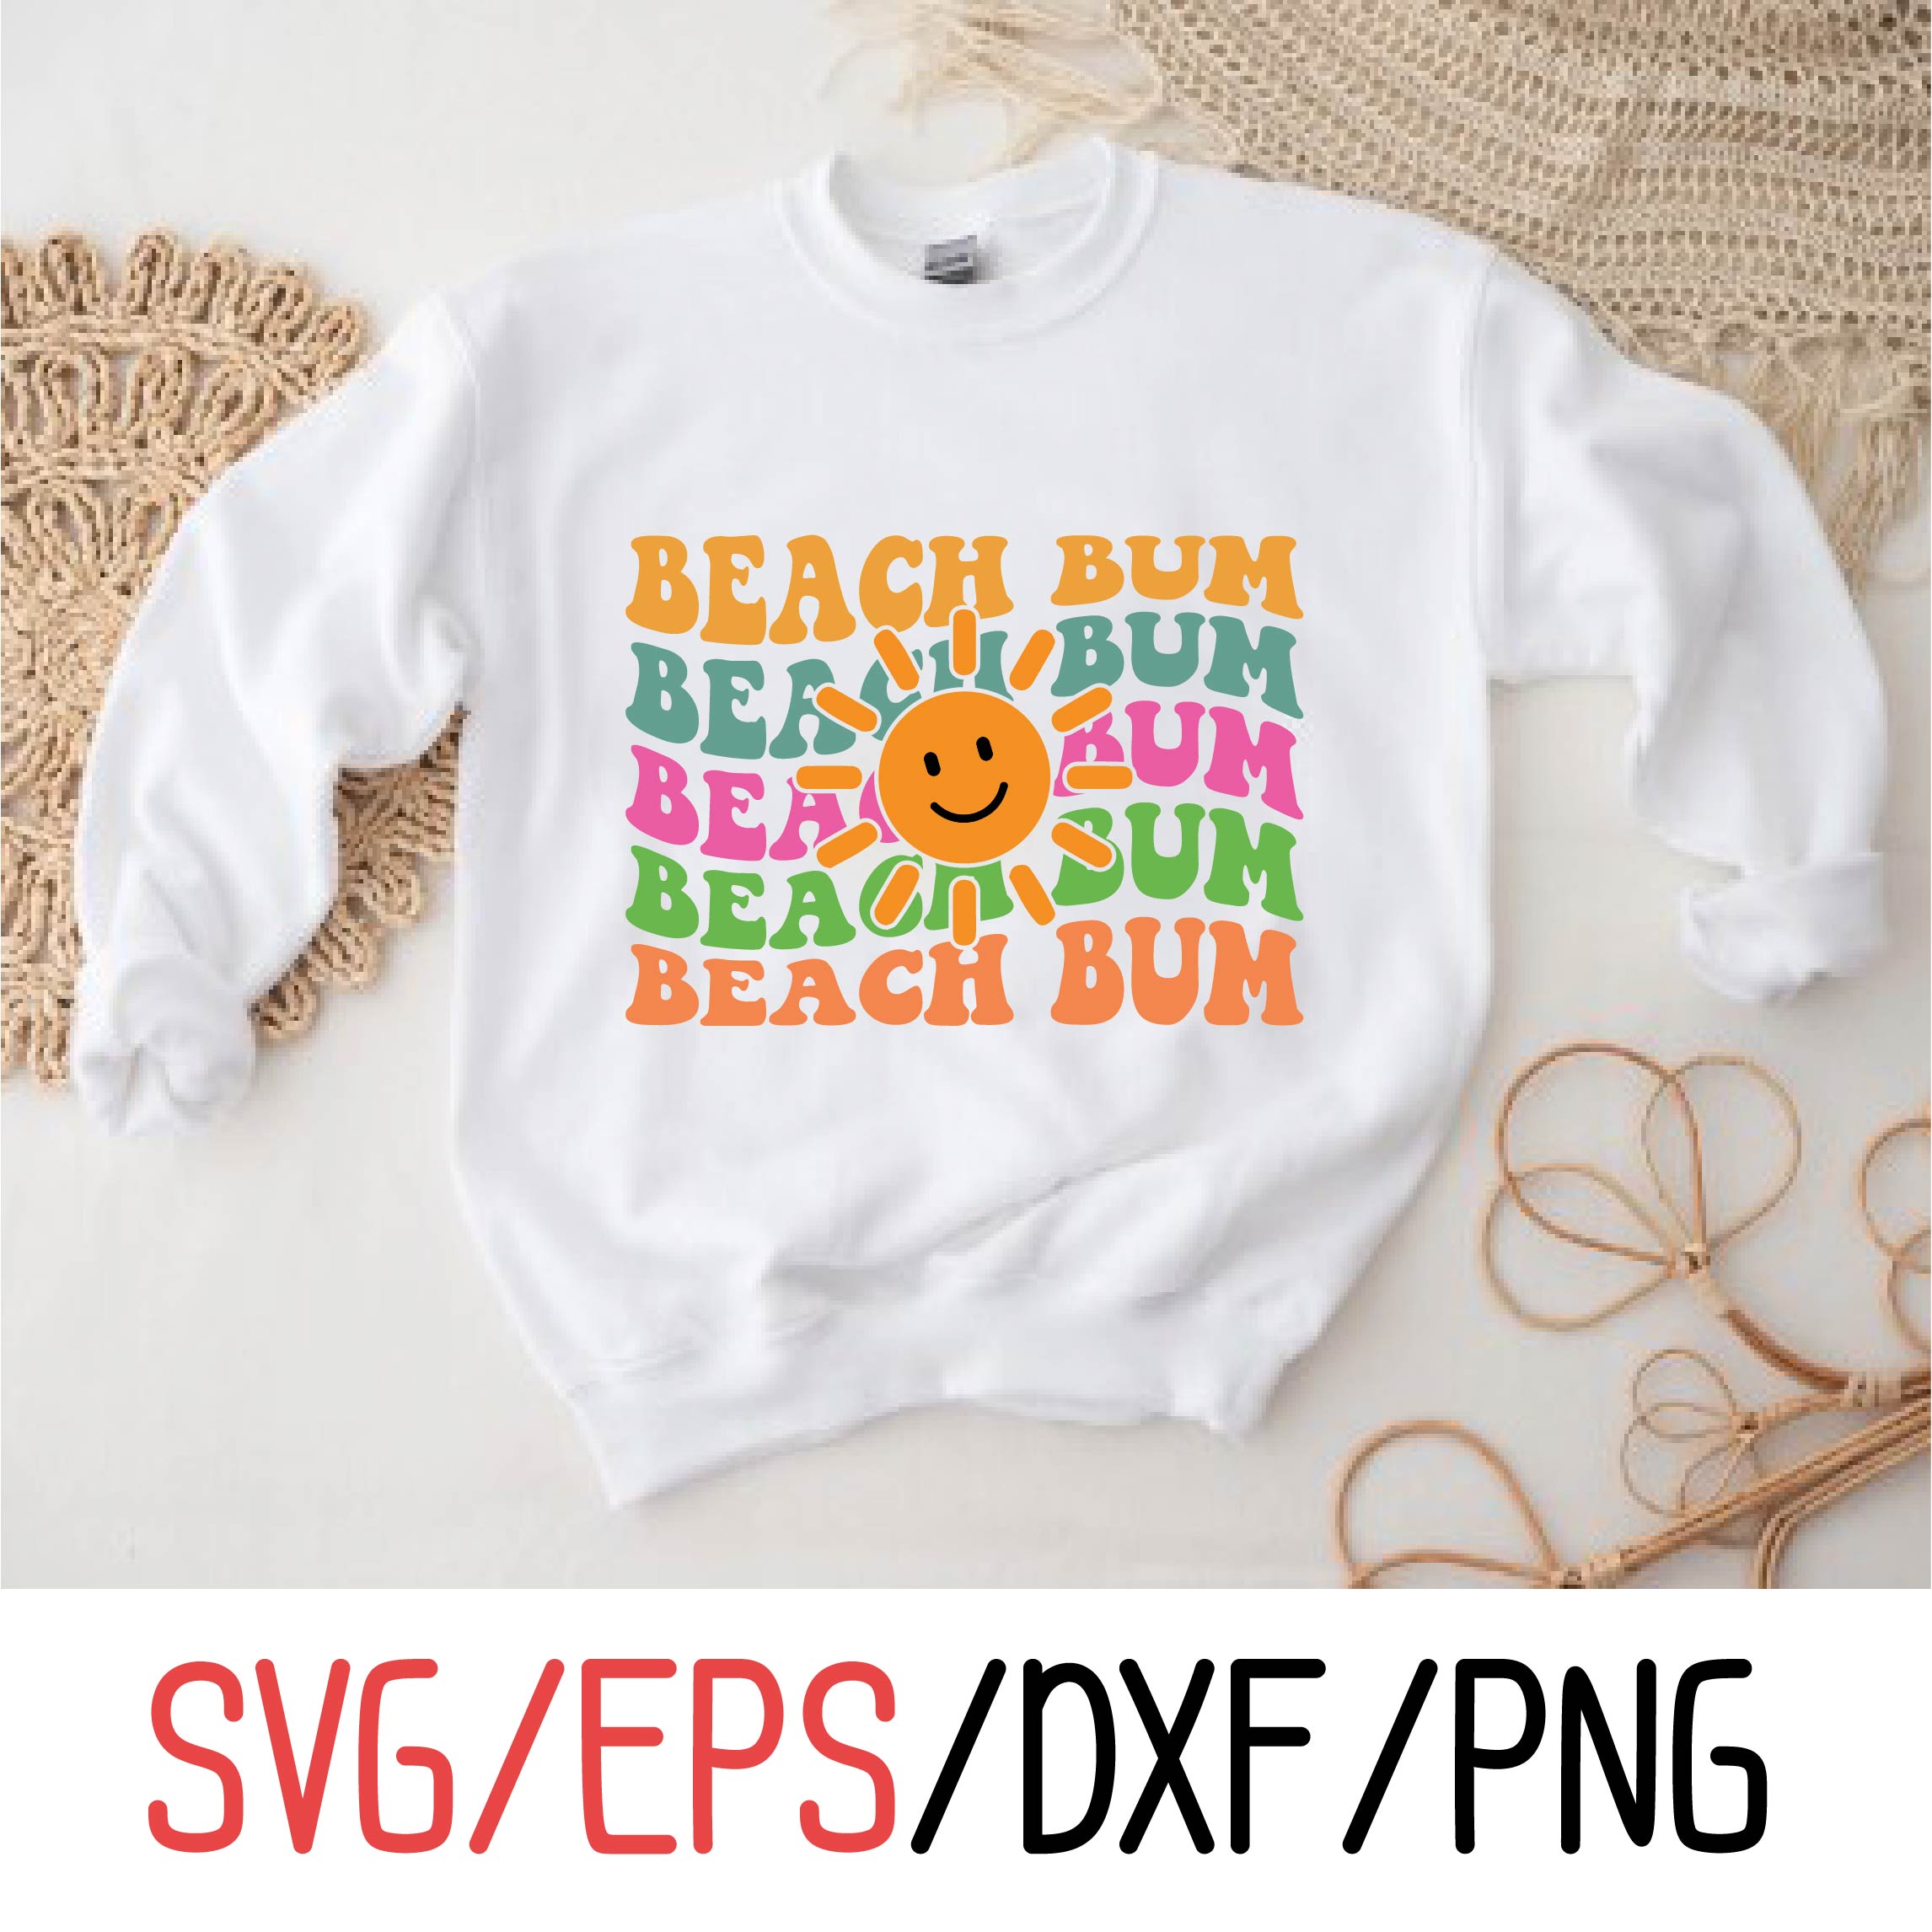 White sweatshirt with the words beach bum on it.